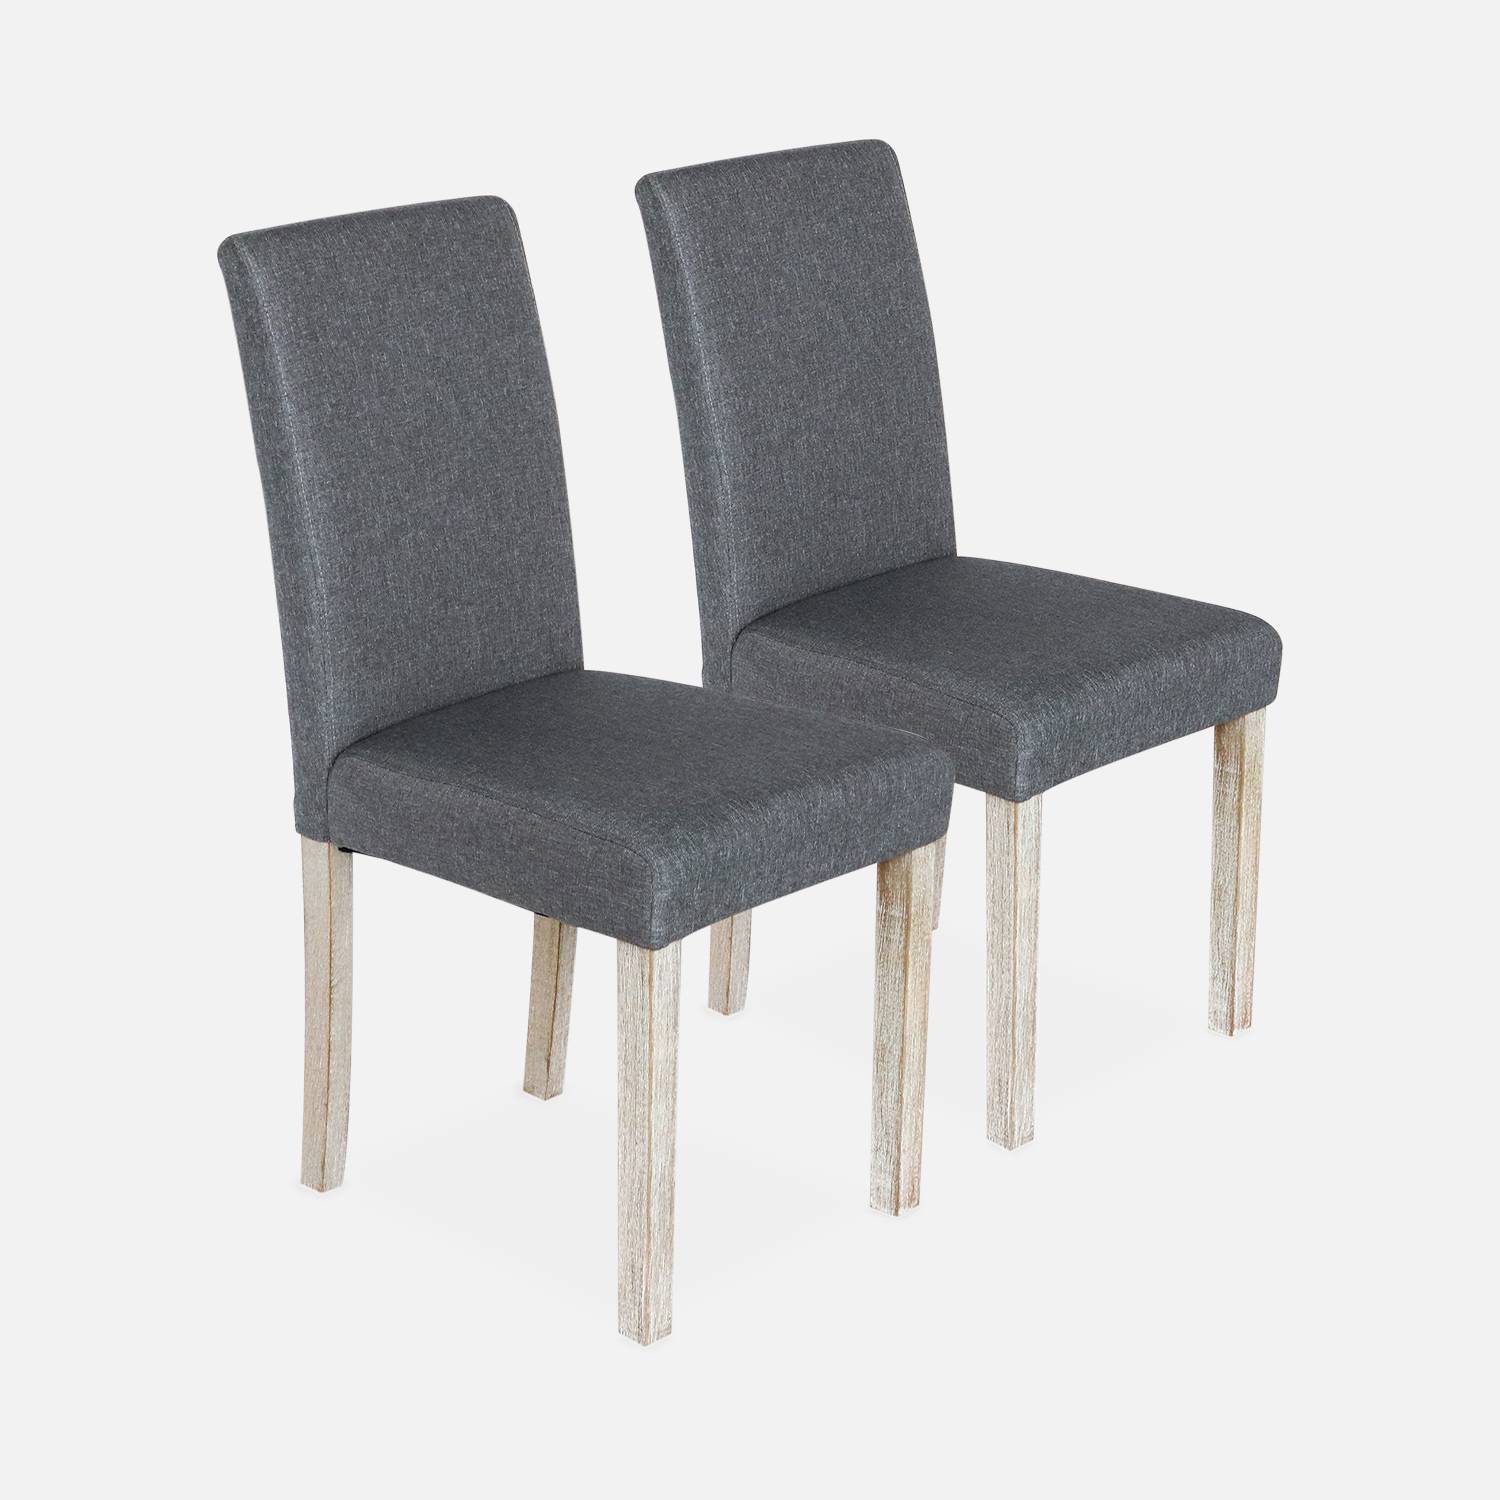  Set di 2 sedie - sedie in tessuto, gambe in legno sbiancato Photo3